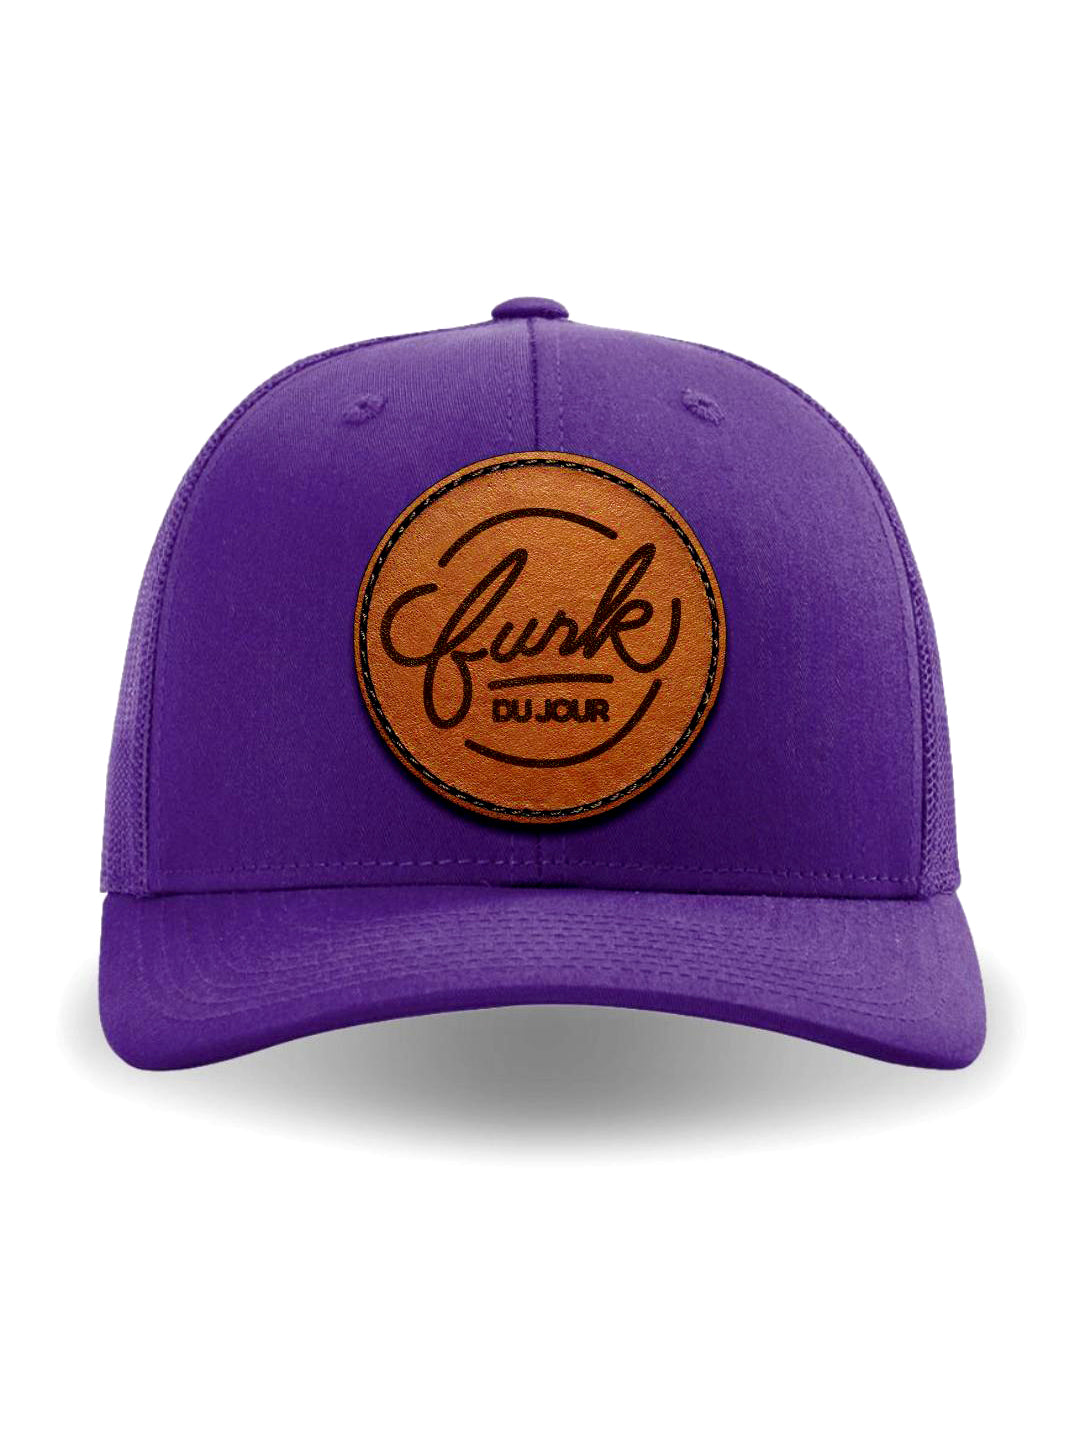 Funk du Jour Prince purple with leather patch trucker cap